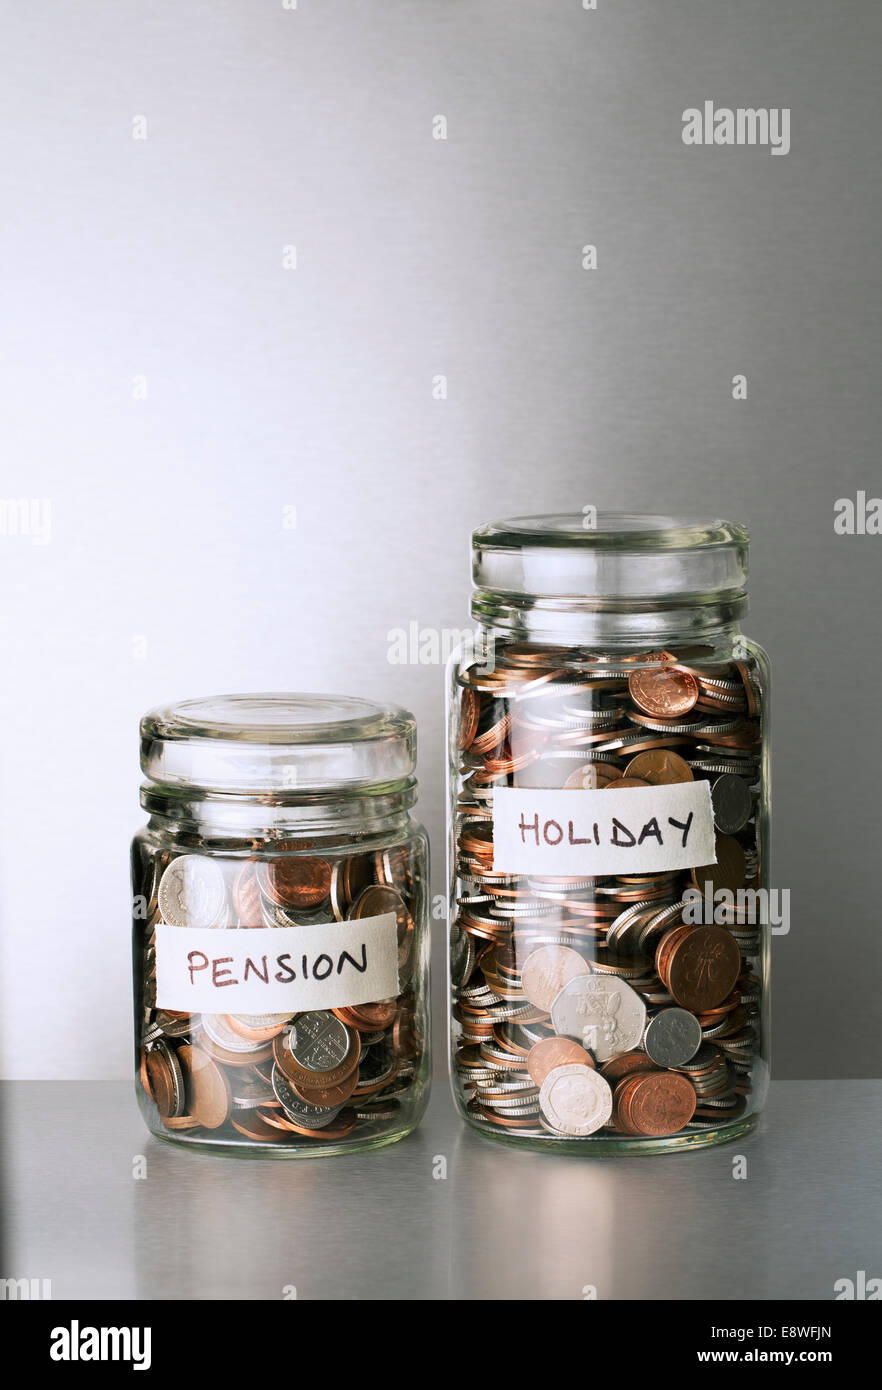 Pension and holiday change savings jars on counter Stock Photo